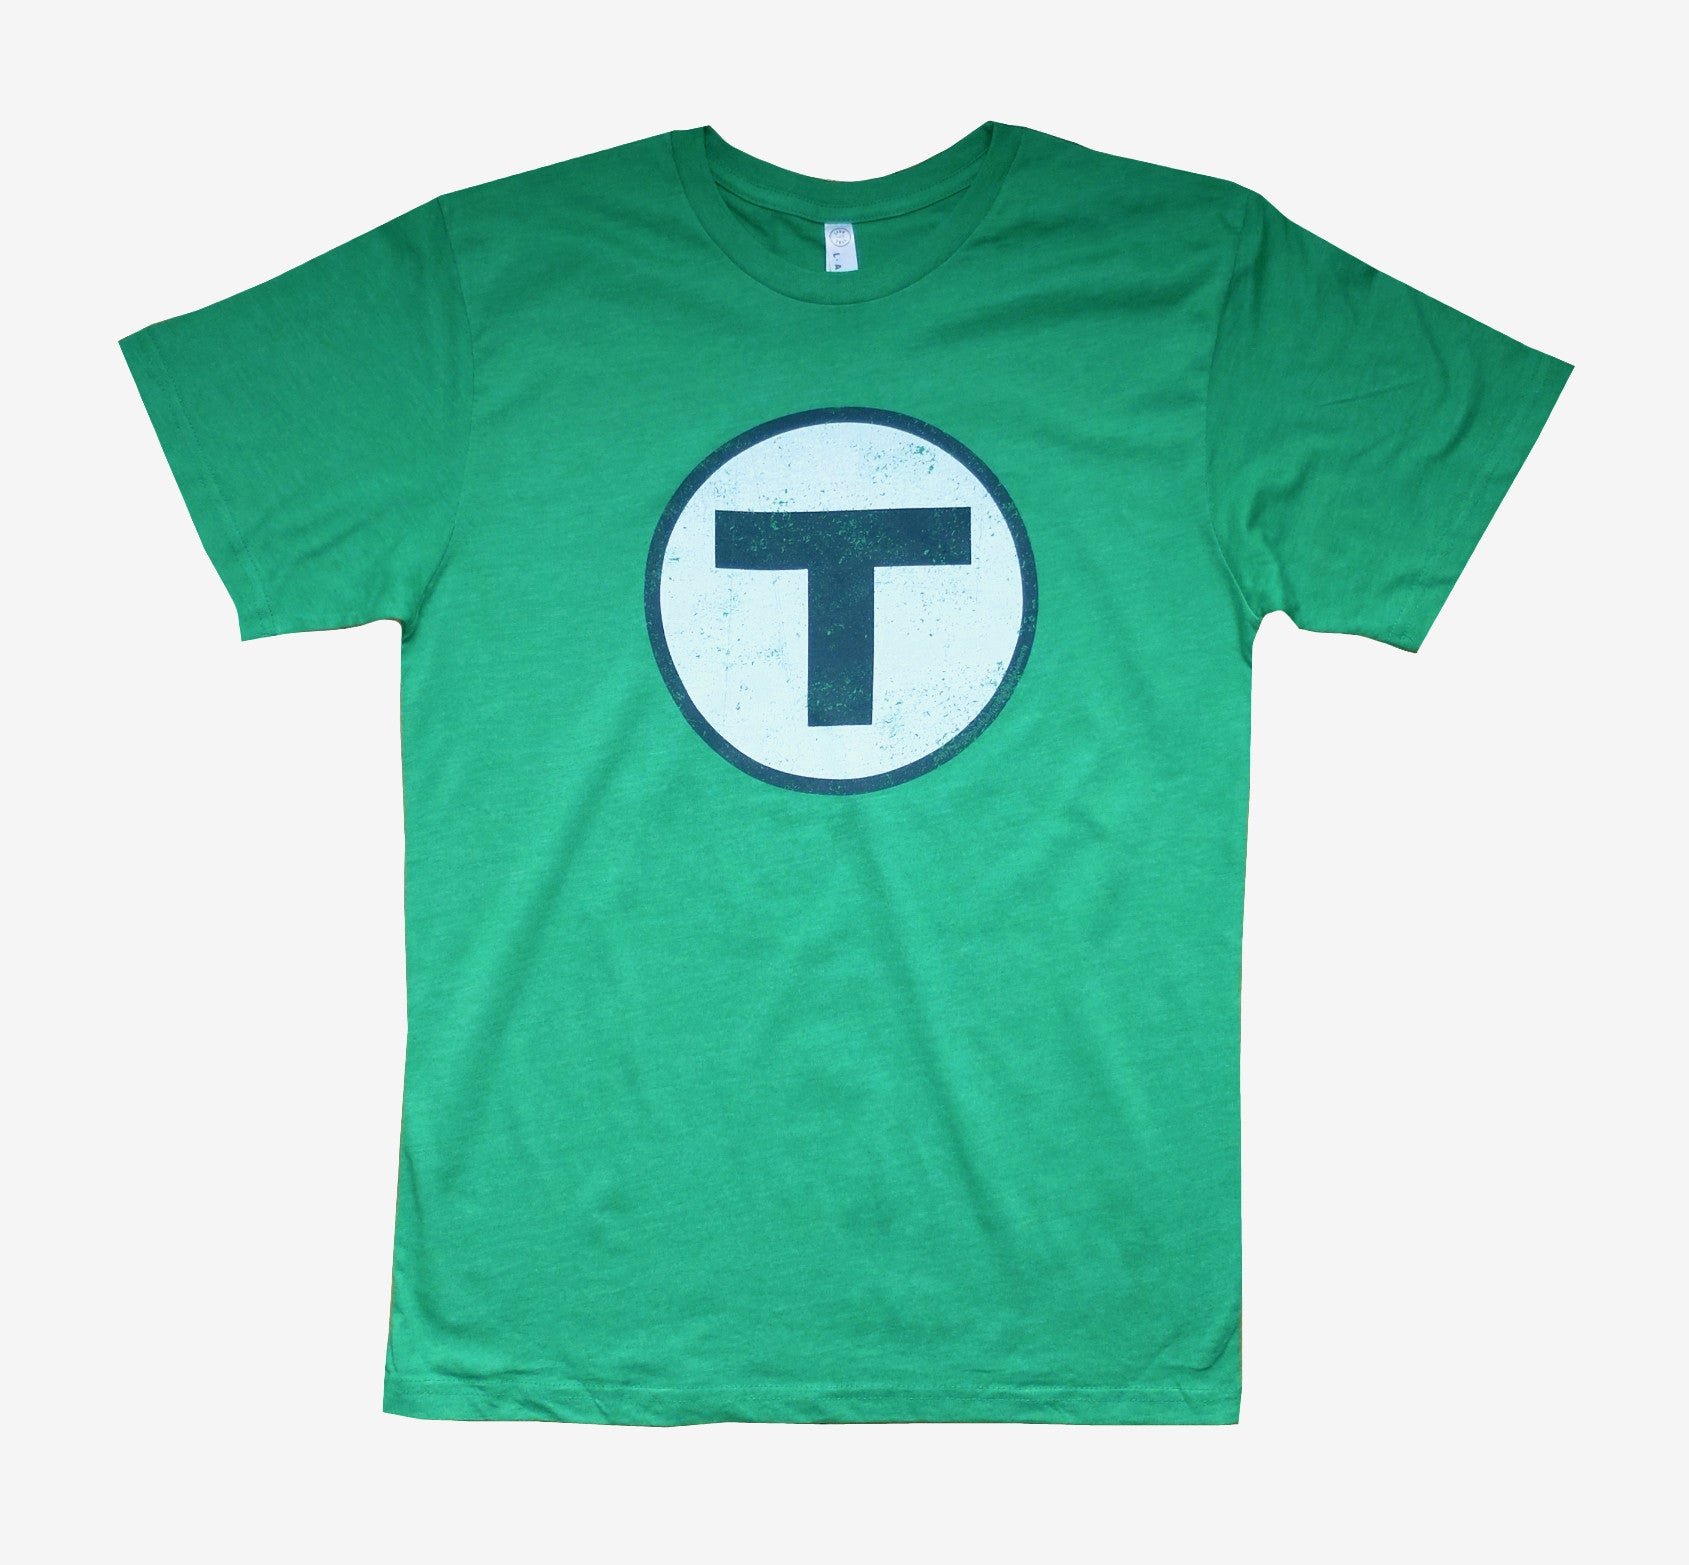 Green T-Shirt with White & Black MBTA "T" Logo